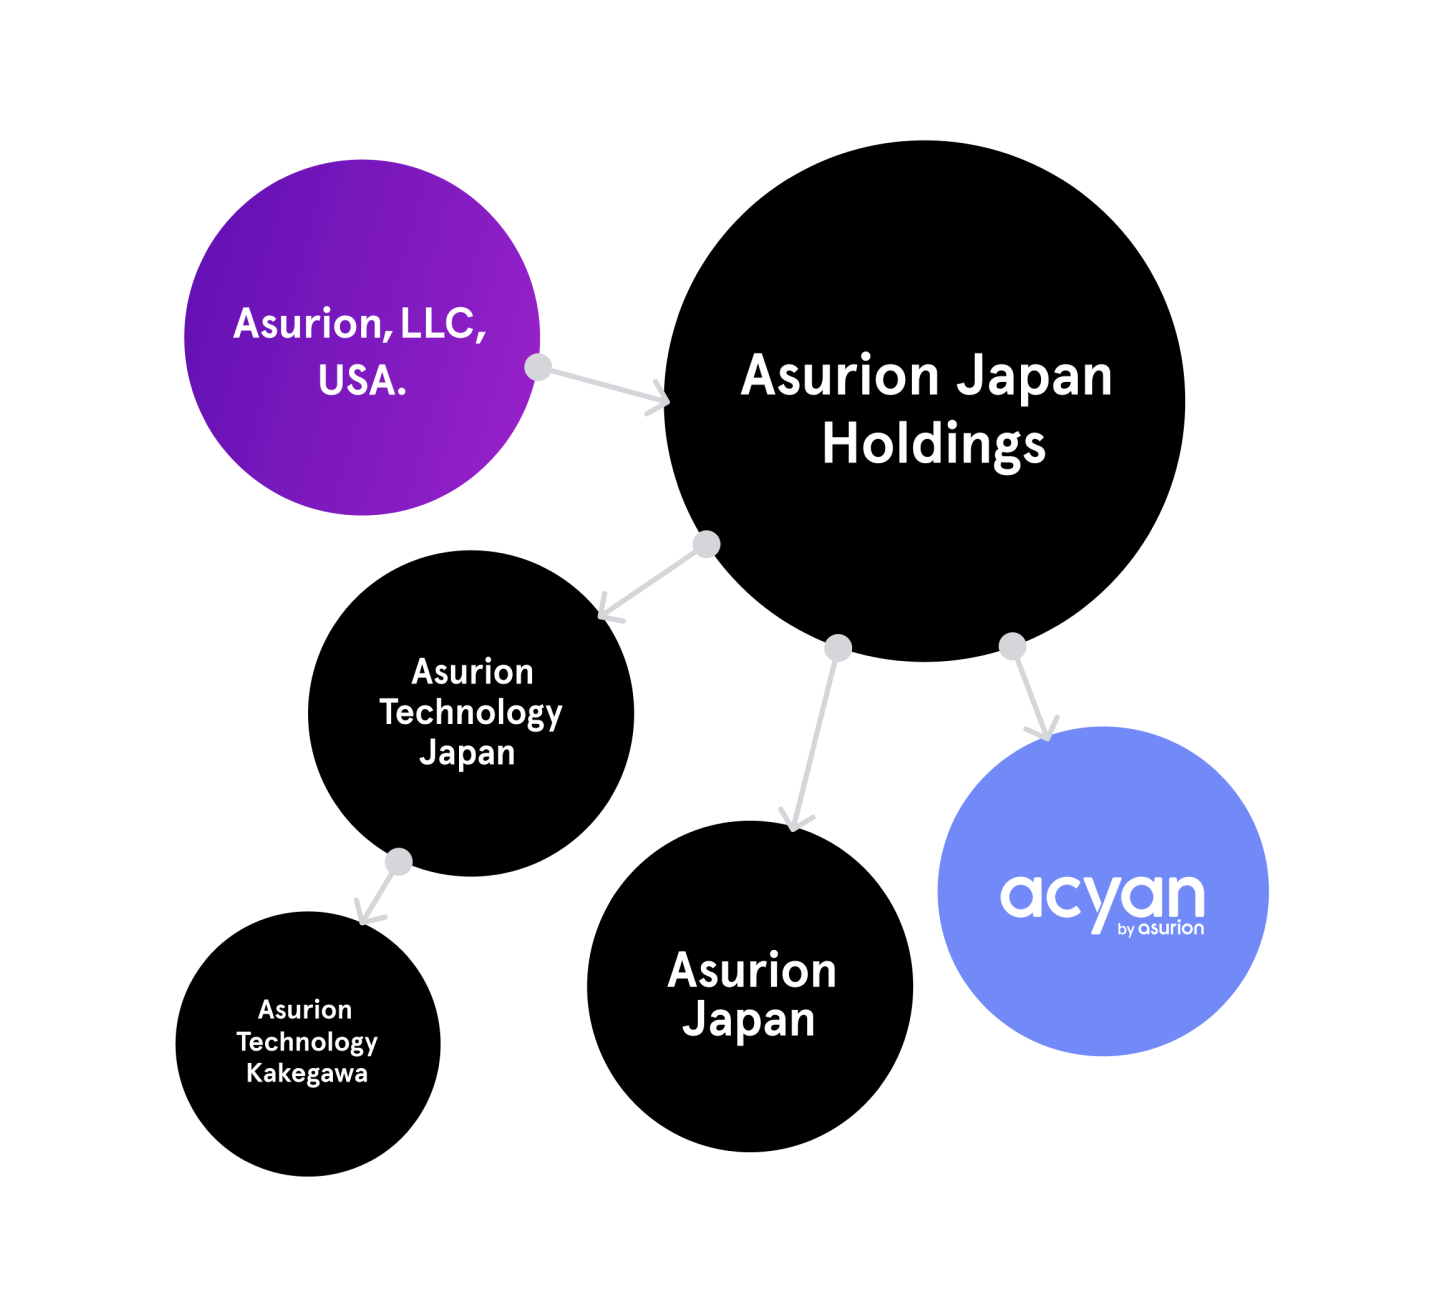 Asurion, LLC, USA. Asurion Japan Holdings. Acyan by Asurion. Asurion Technology Japan. Asurion Japan. Asurion Technology Kakegawa.